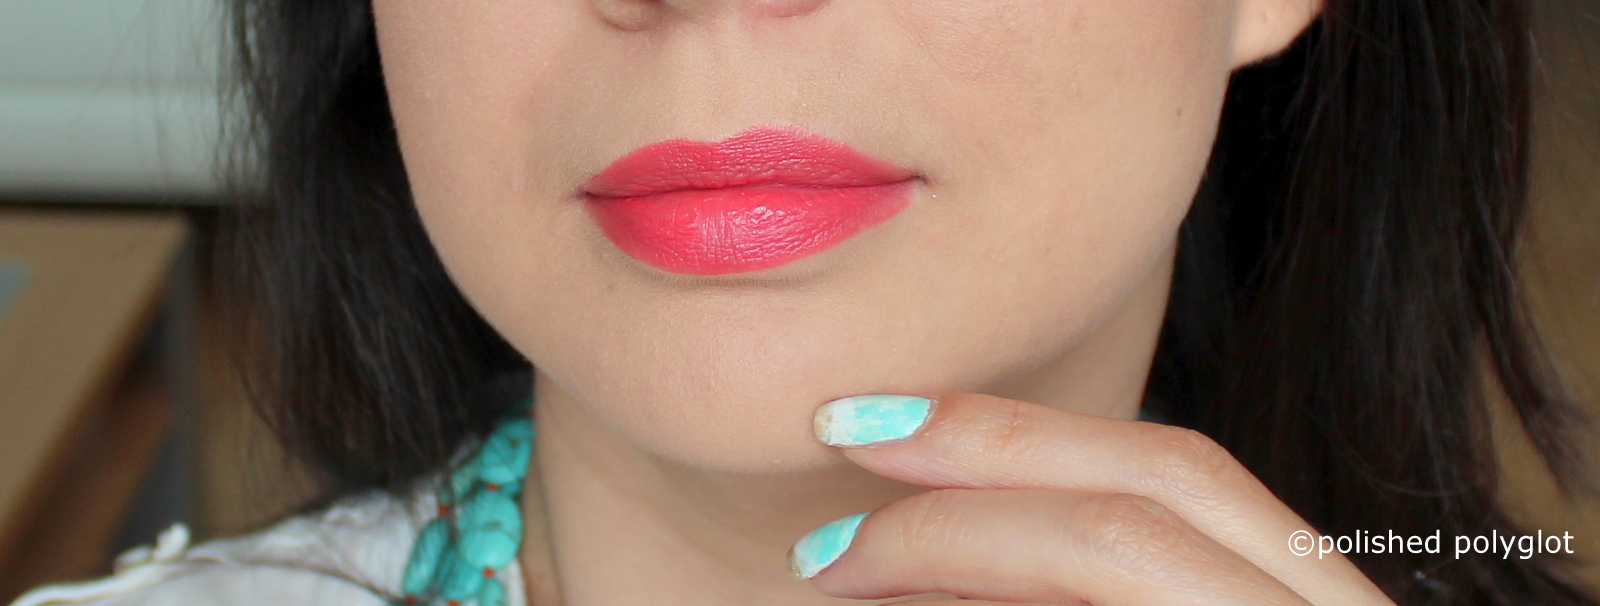 Makeup │ My top 5 lipsticks for Summer / Polished Polyglot